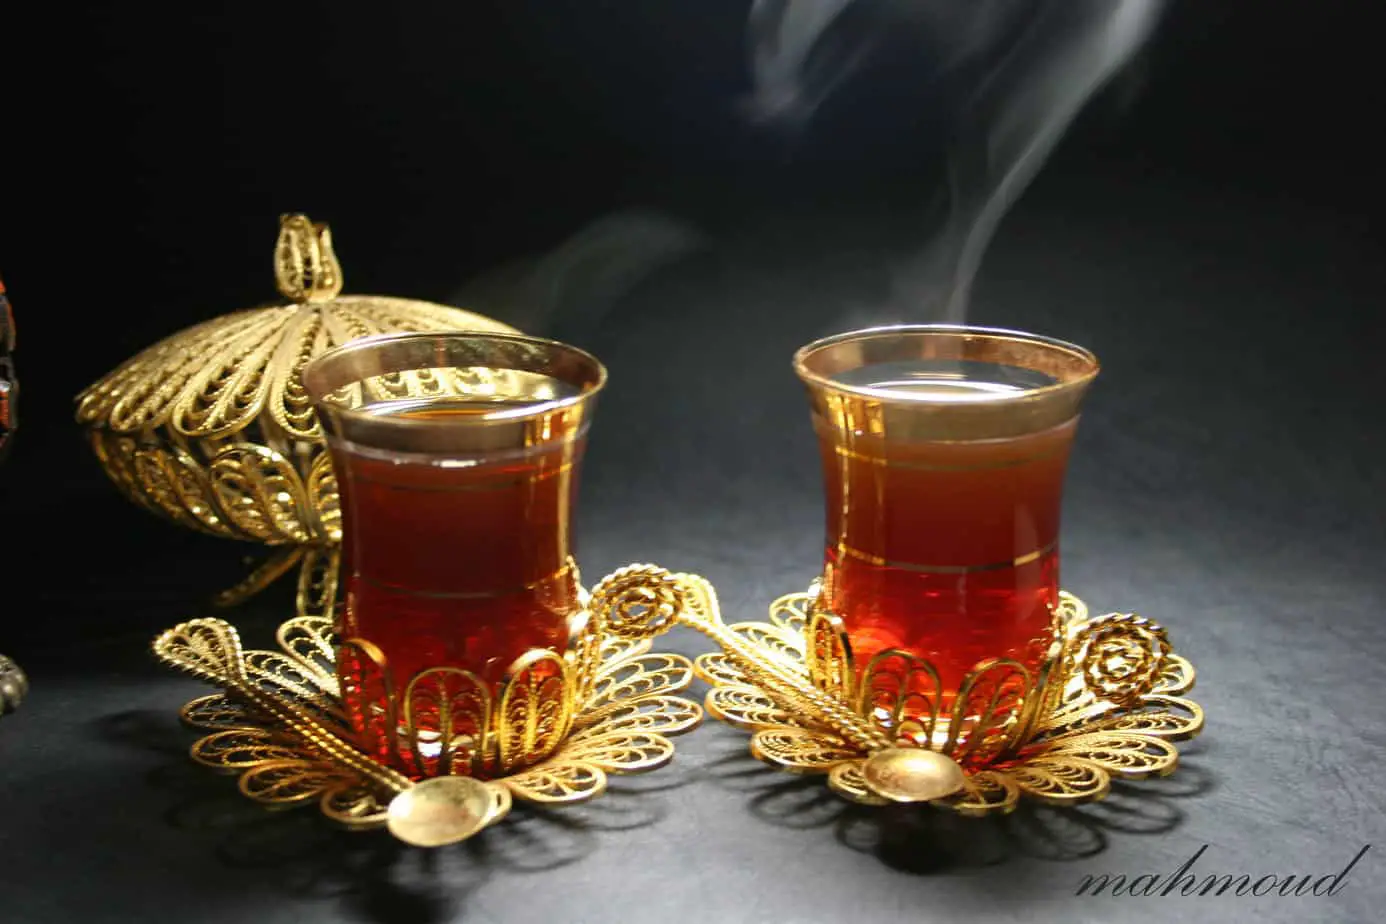 Use these Farsi phrases while drinking tea